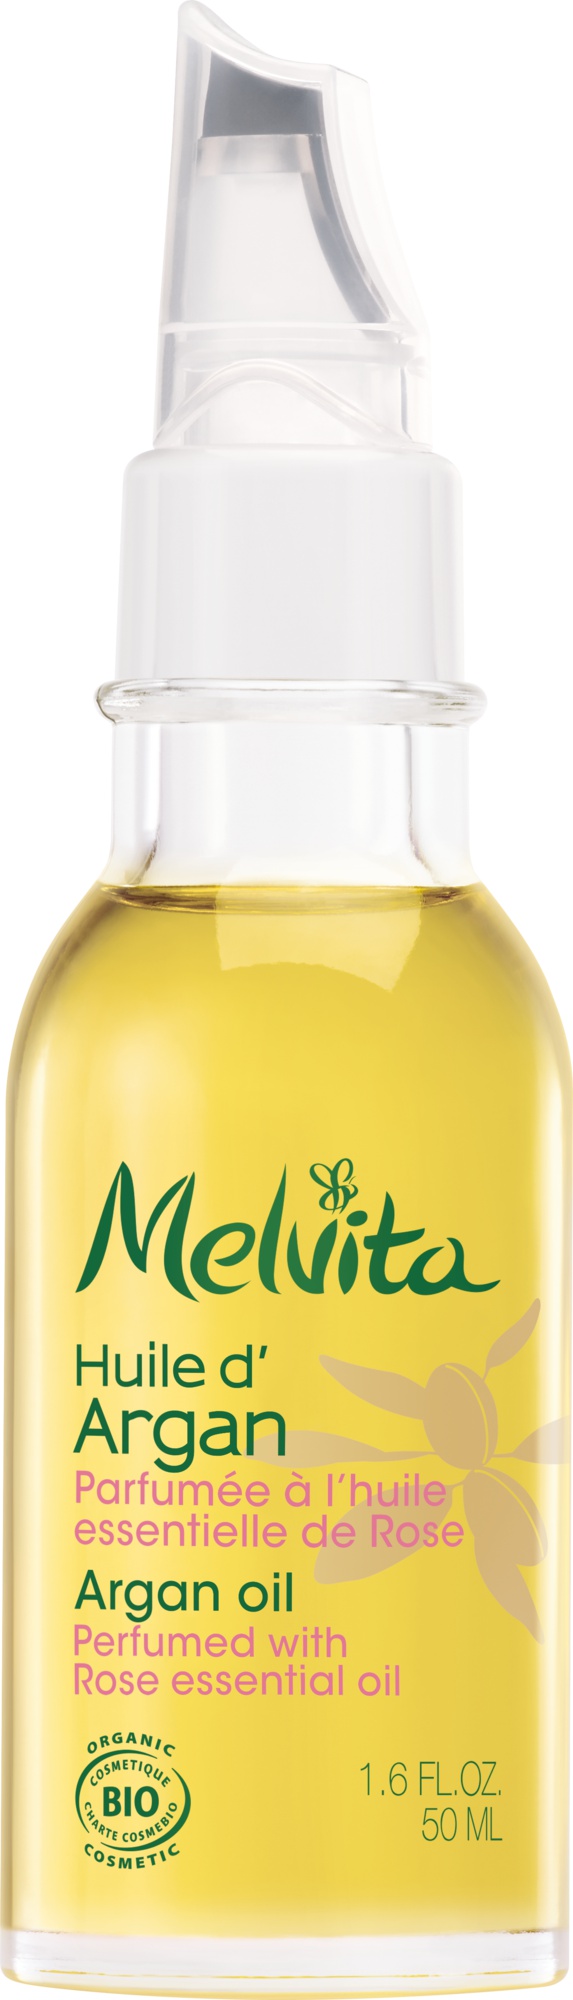 MELVITA Argan Oil purfumed with Rose Essential Oil